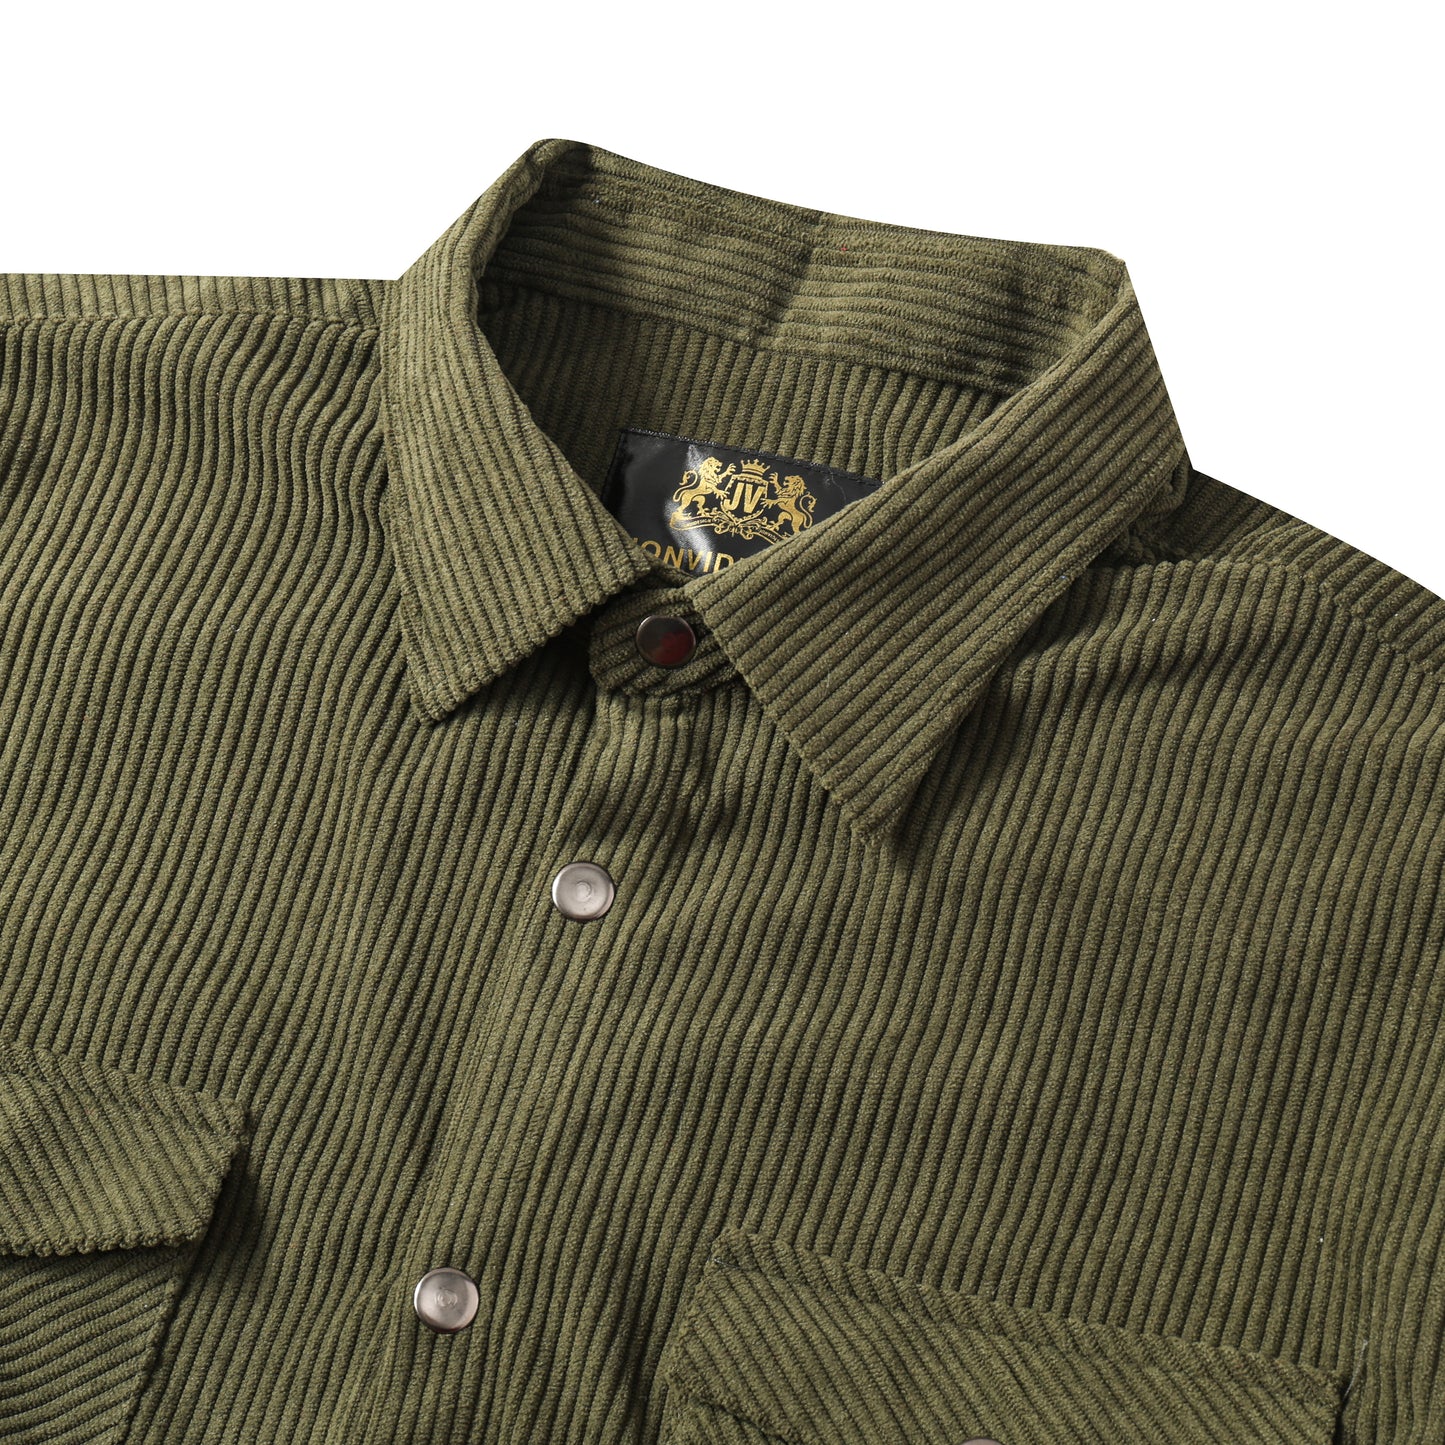 Corduroy Plain Color Snap Closure Long Sleeve Shirt-Olive Green